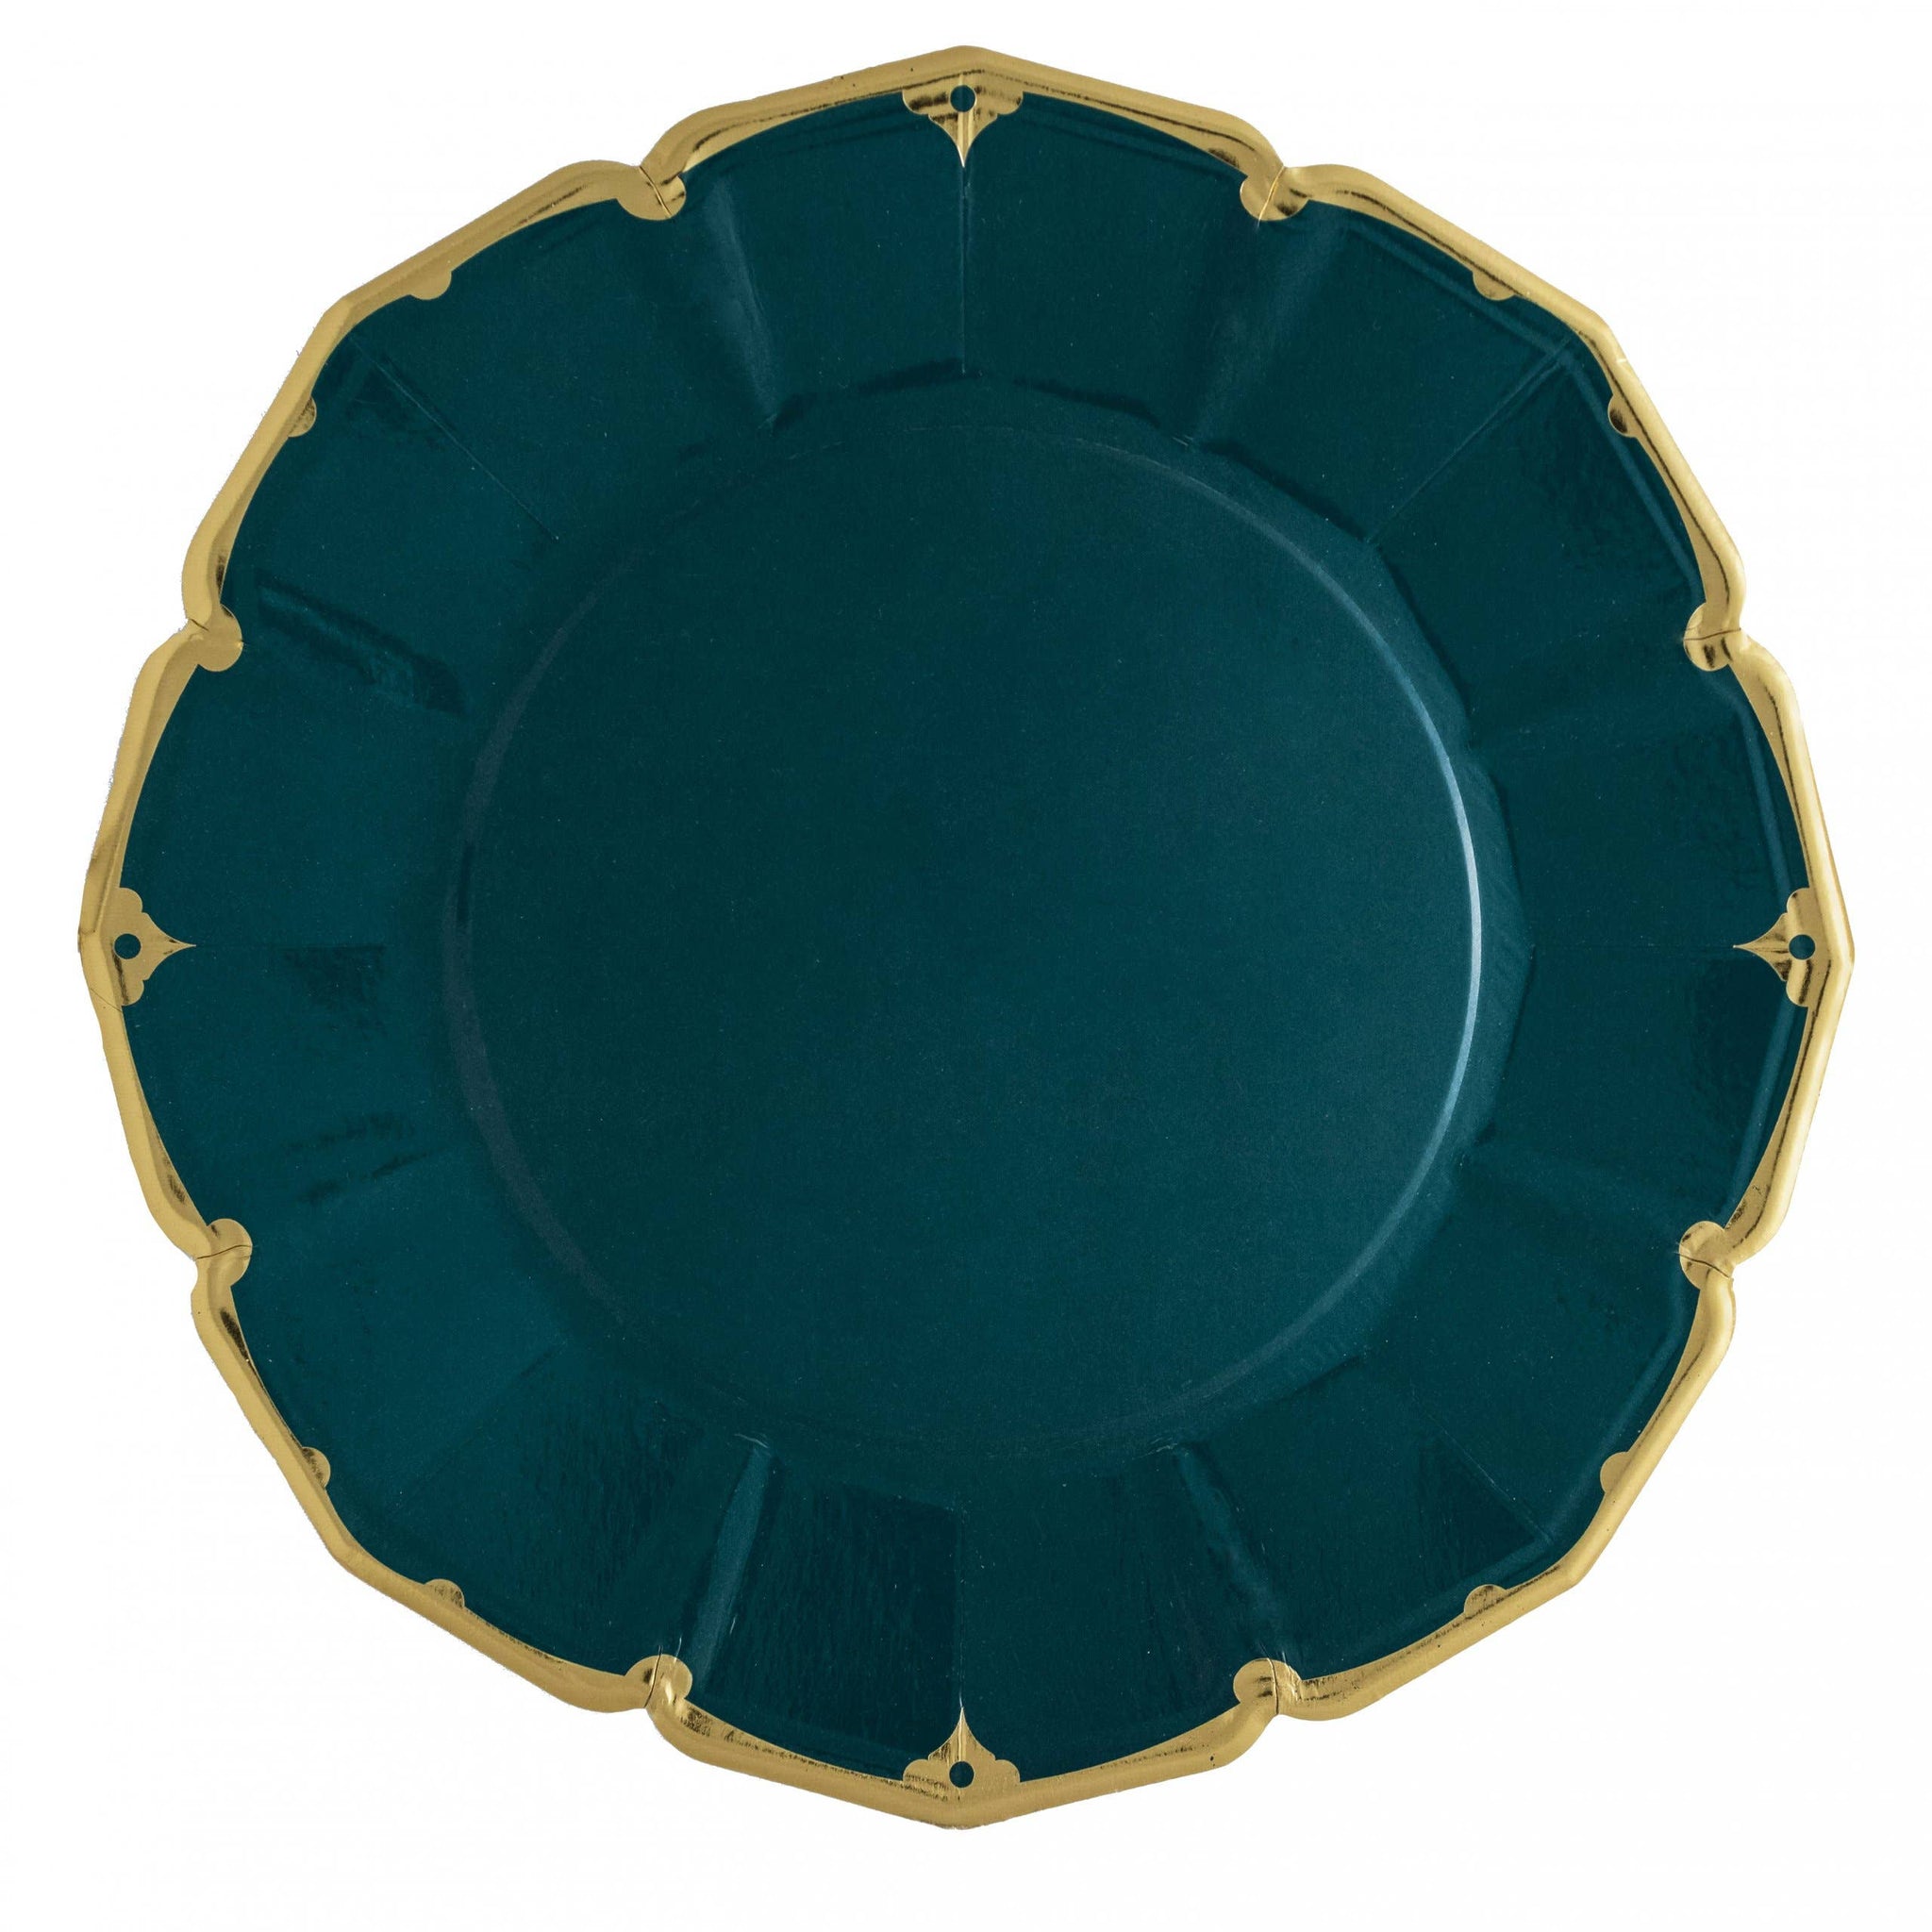 8 Emerald Dinner Plates